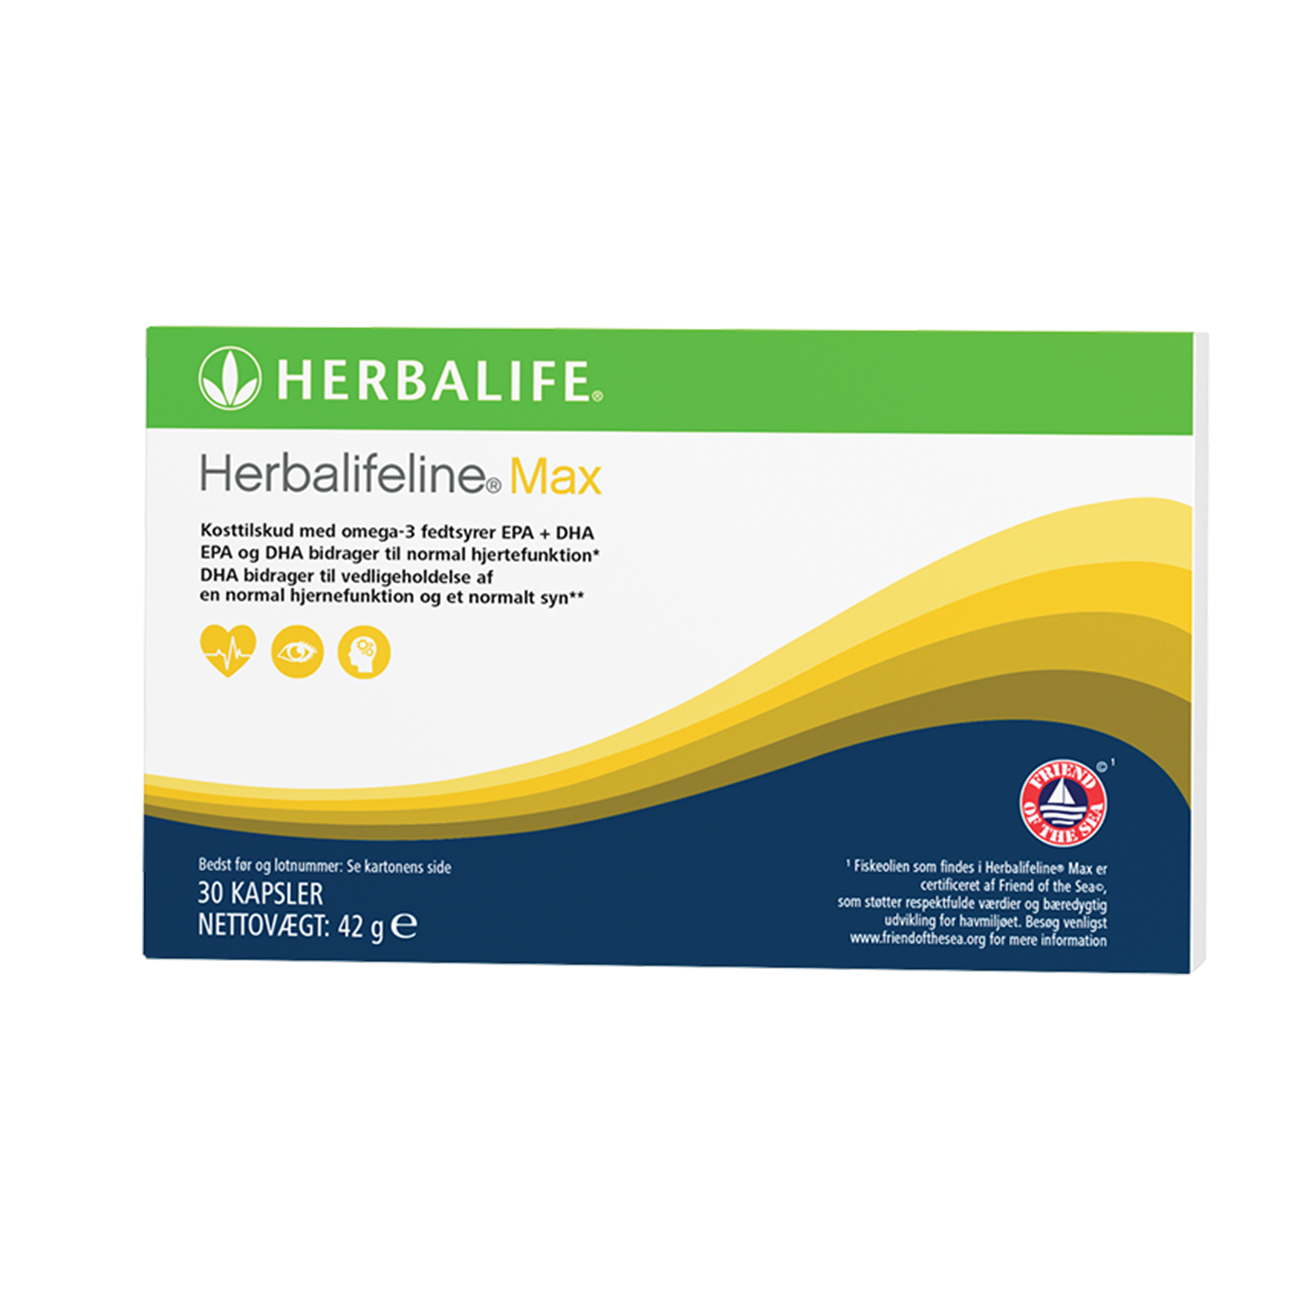 Herbalifeline® Max Omega-3 product